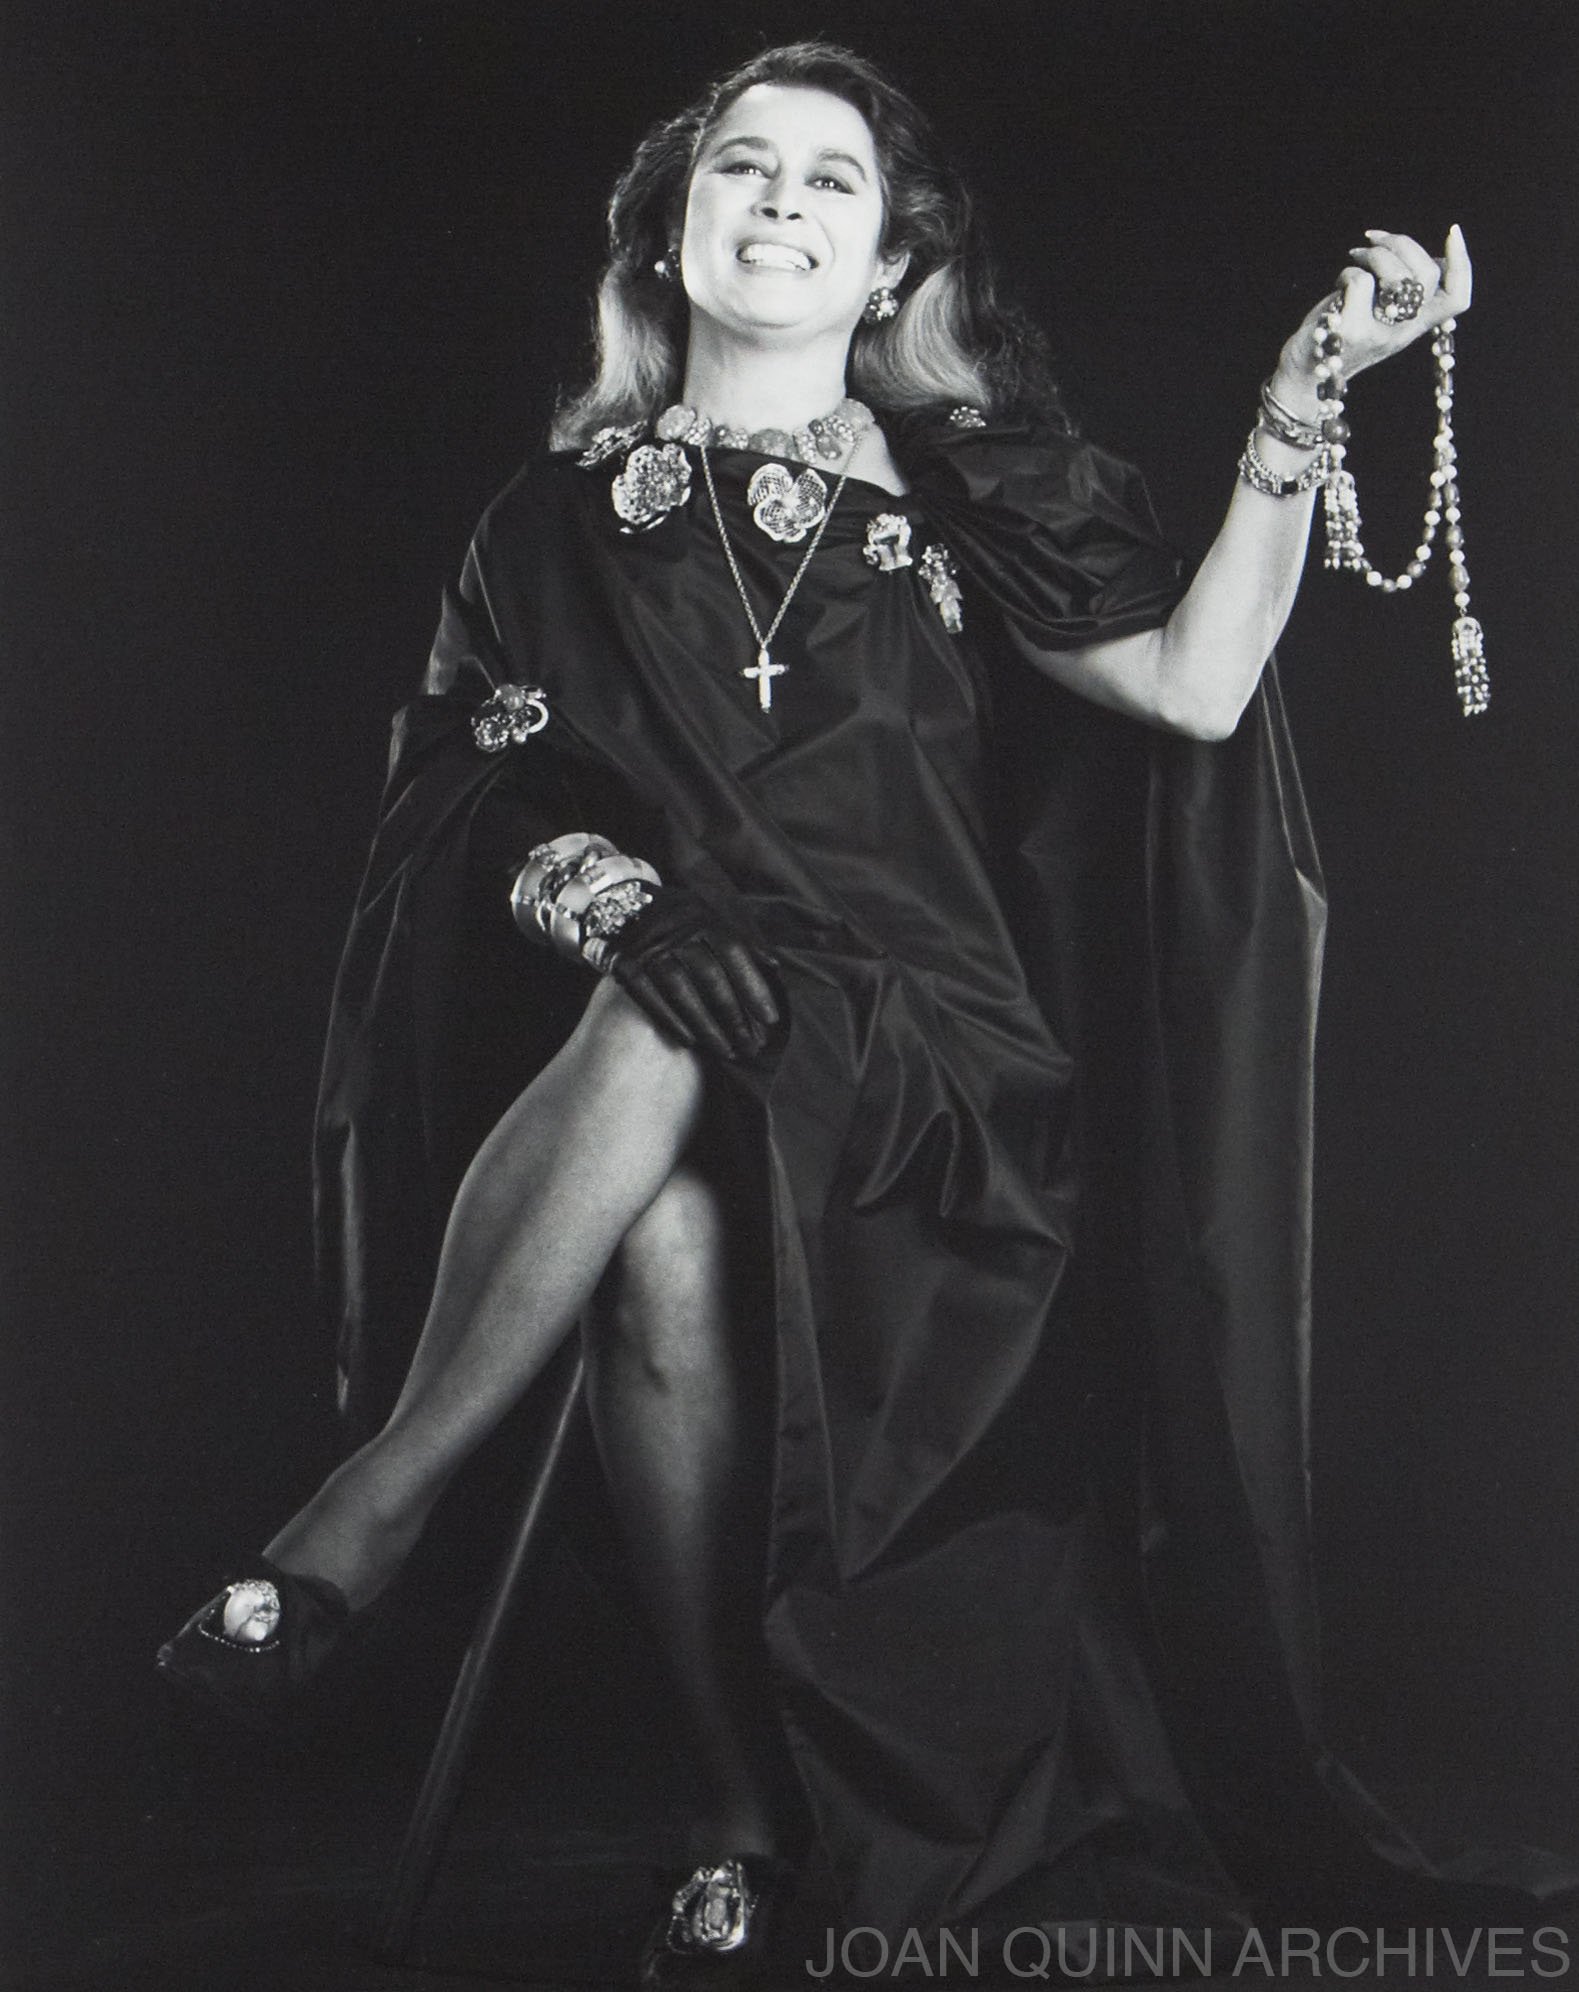 Joan by Robert Mapplethorpe, 1986.